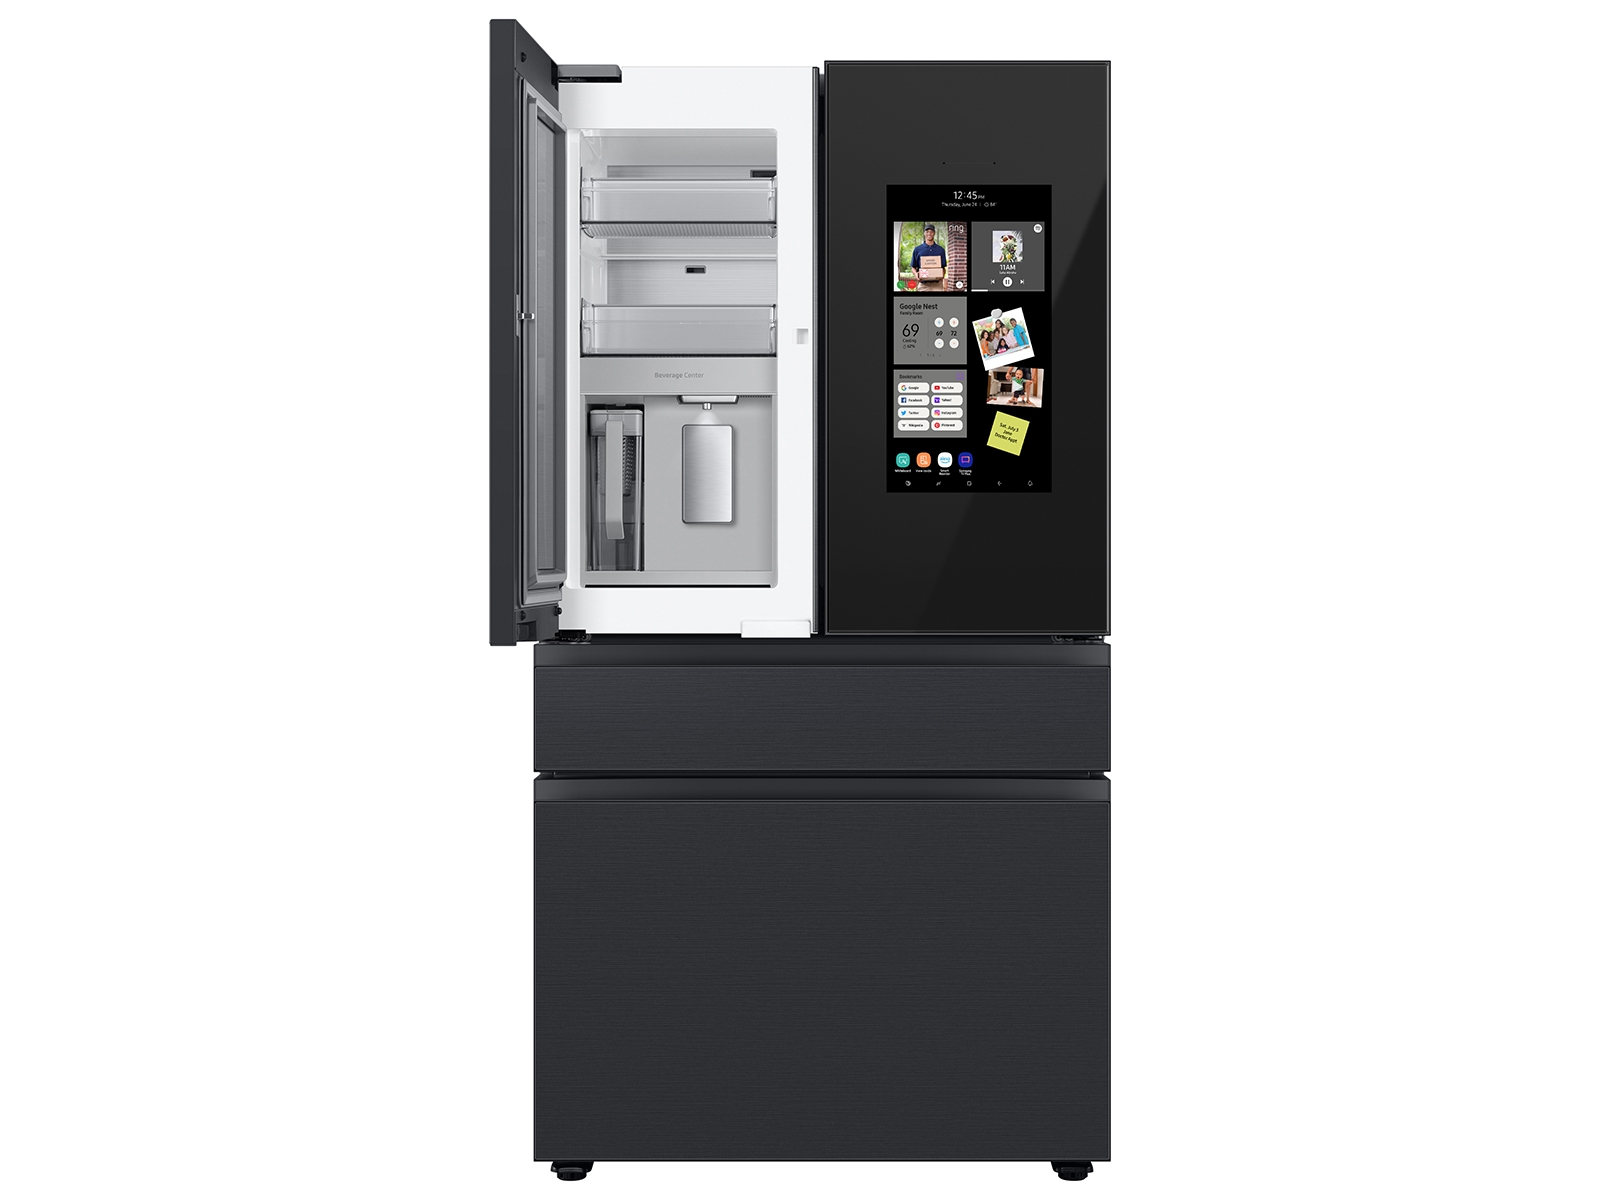 Samsung Bespoke Family Hub+ Refrigerator With 32-inch Screen